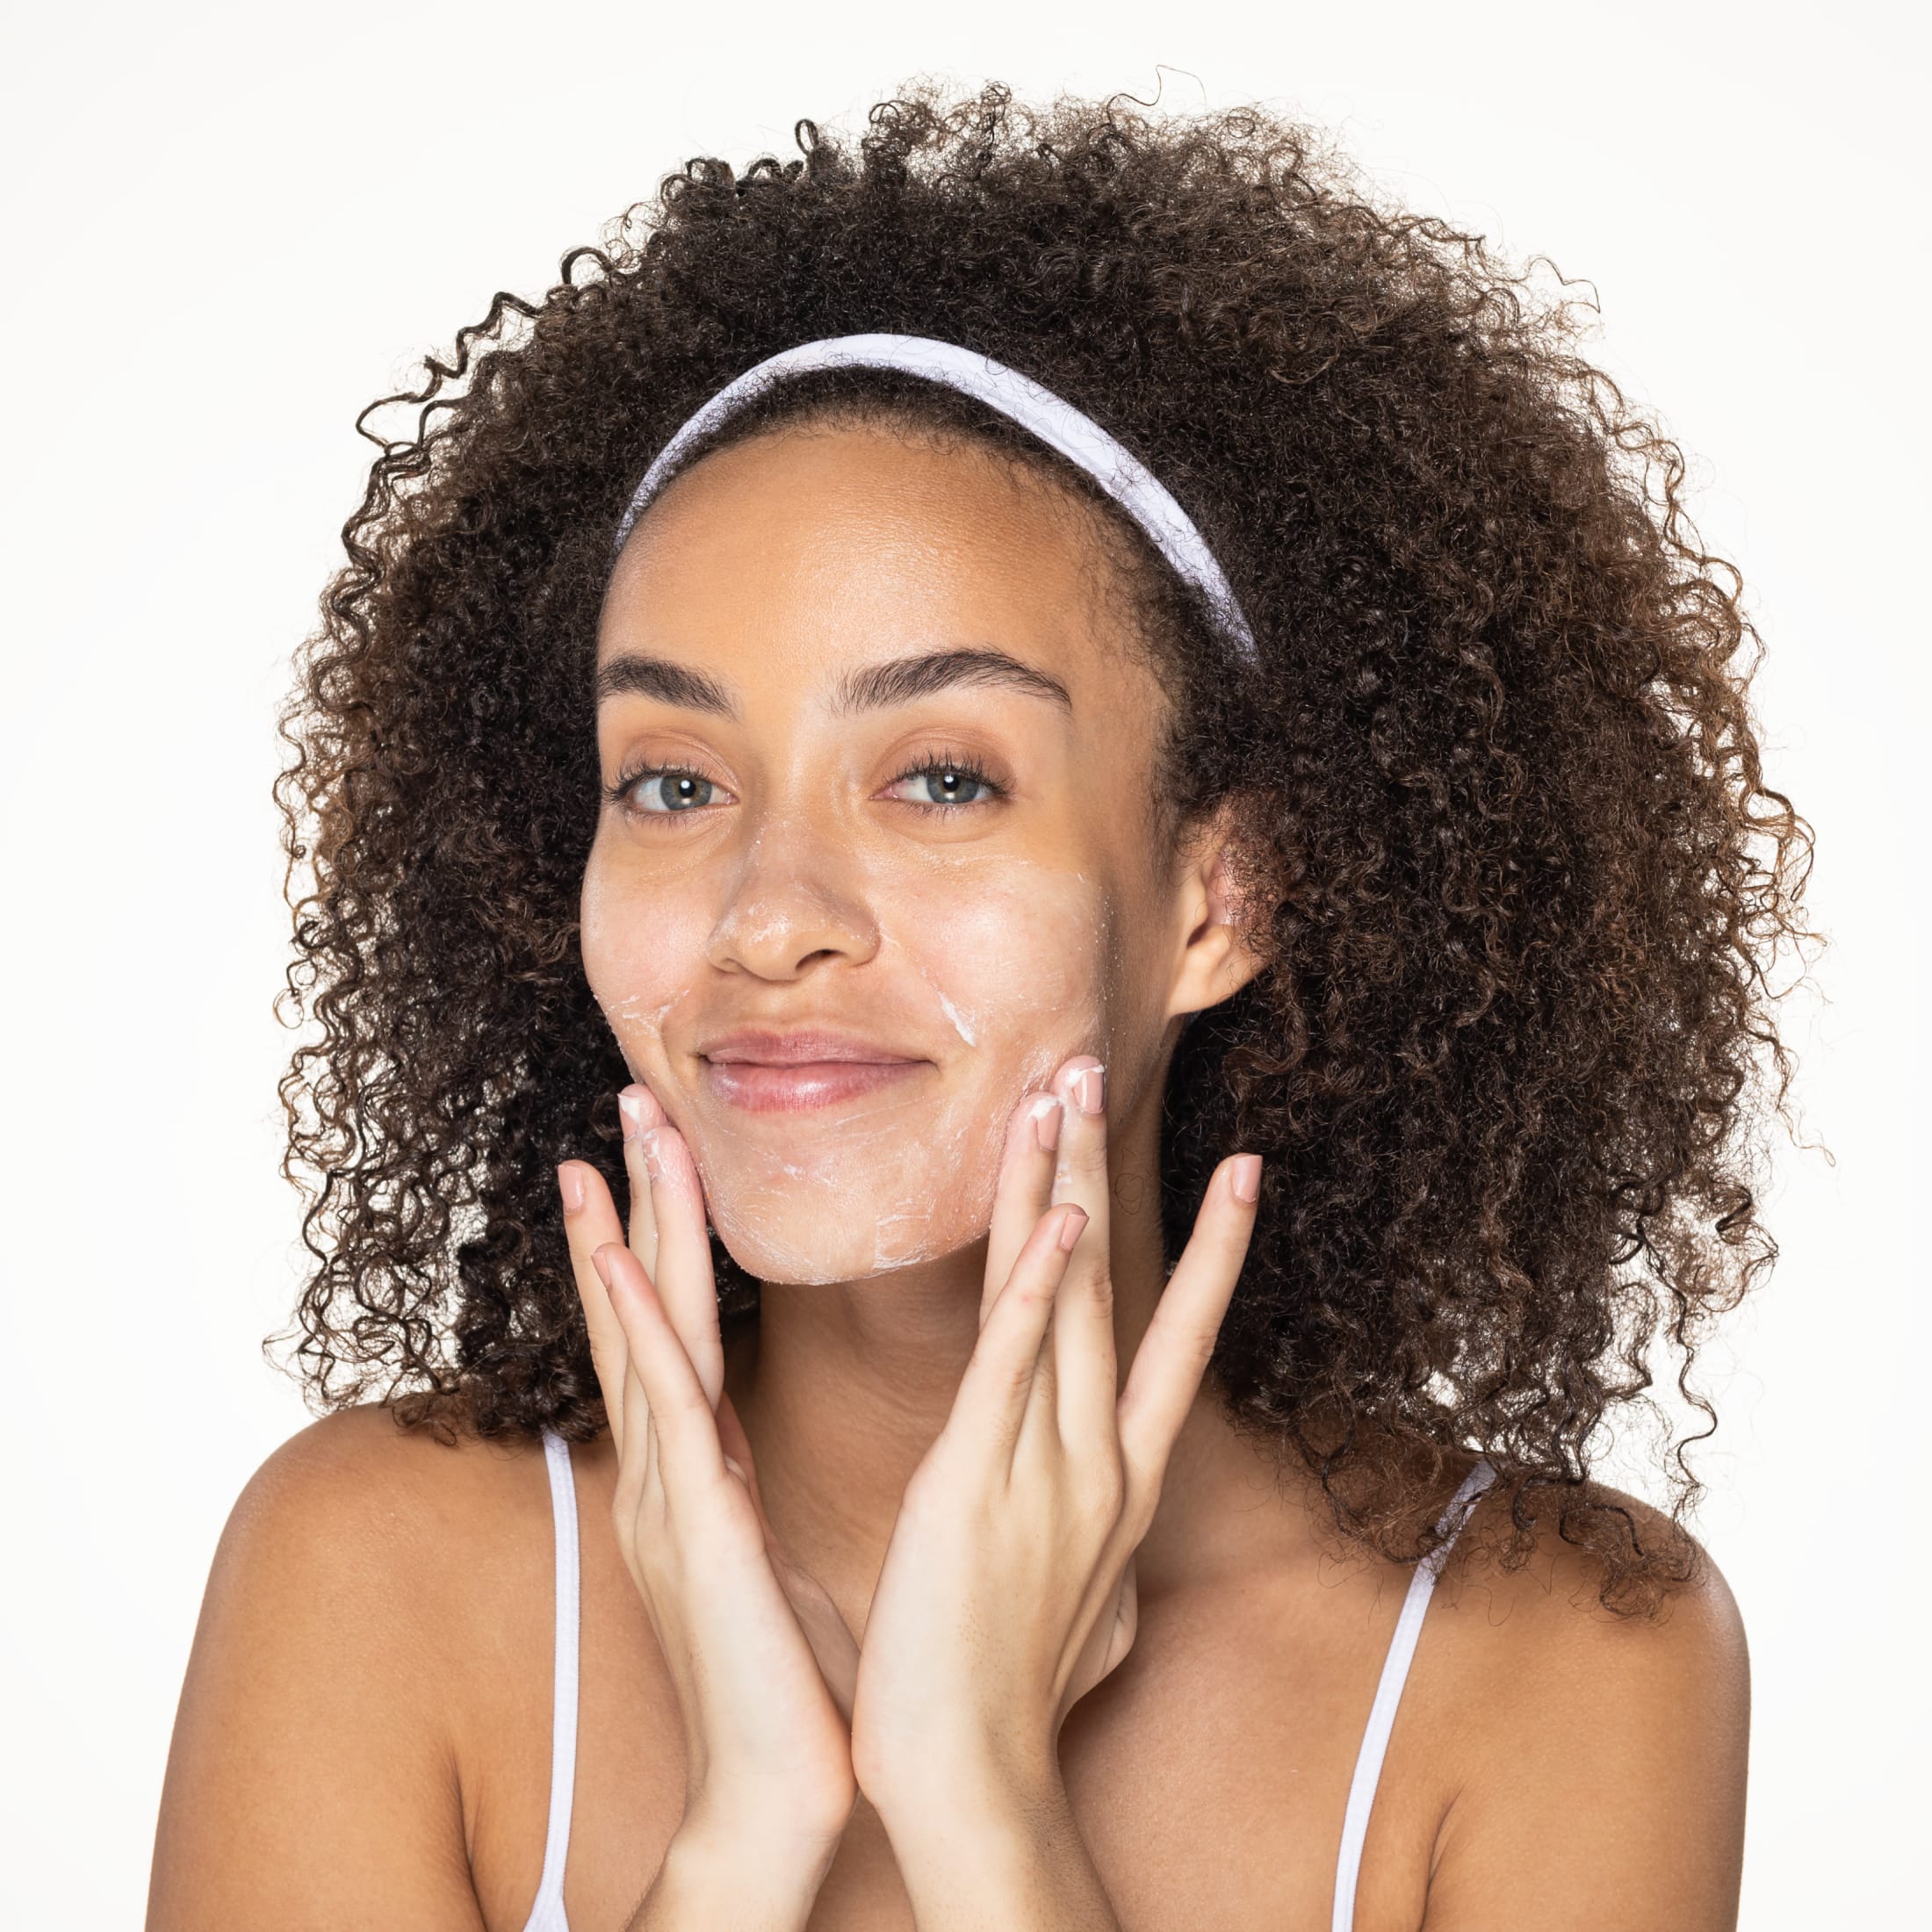 Neutrogena Deep Clean Gentle Facial Scrub, Oil free Cleanser 4.2 fl. oz - image 4 of 12